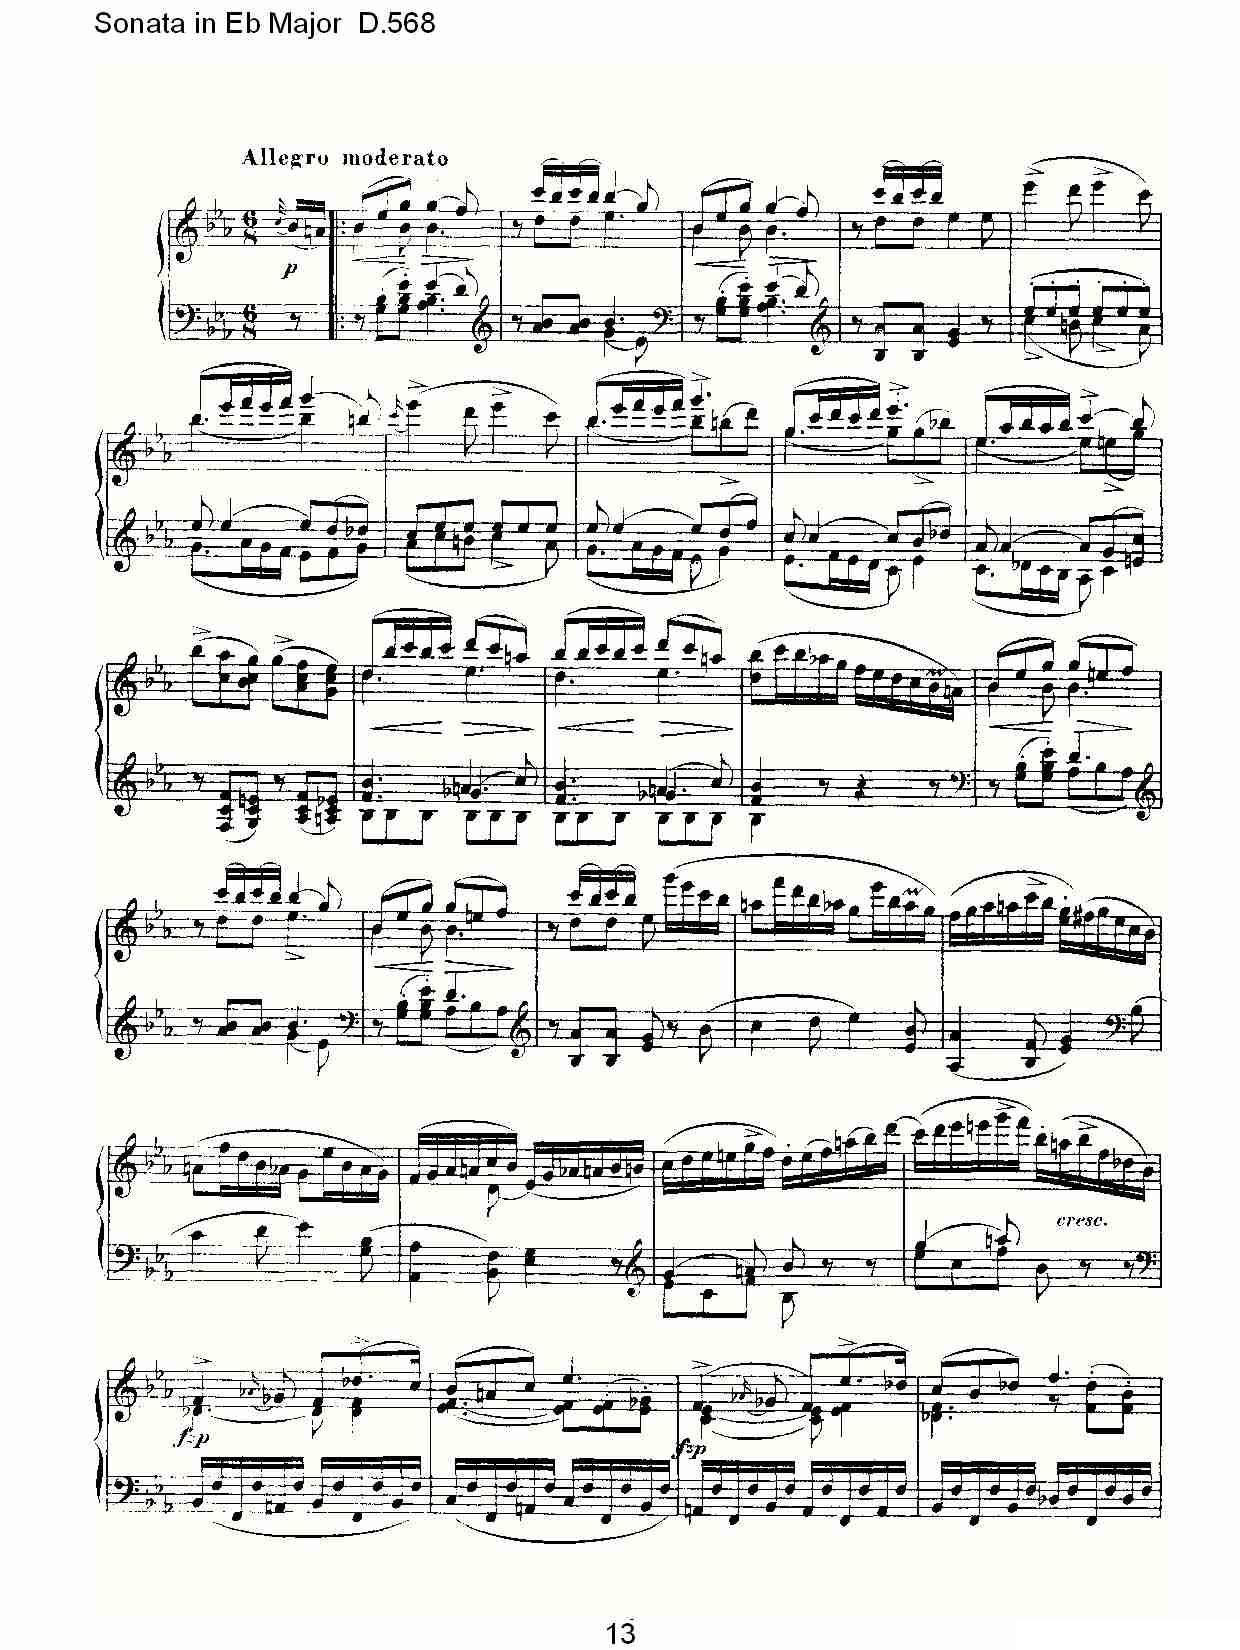 Sonata in Eb Major D.568（Eb大调奏鸣曲 D.568）钢琴曲谱（图13）